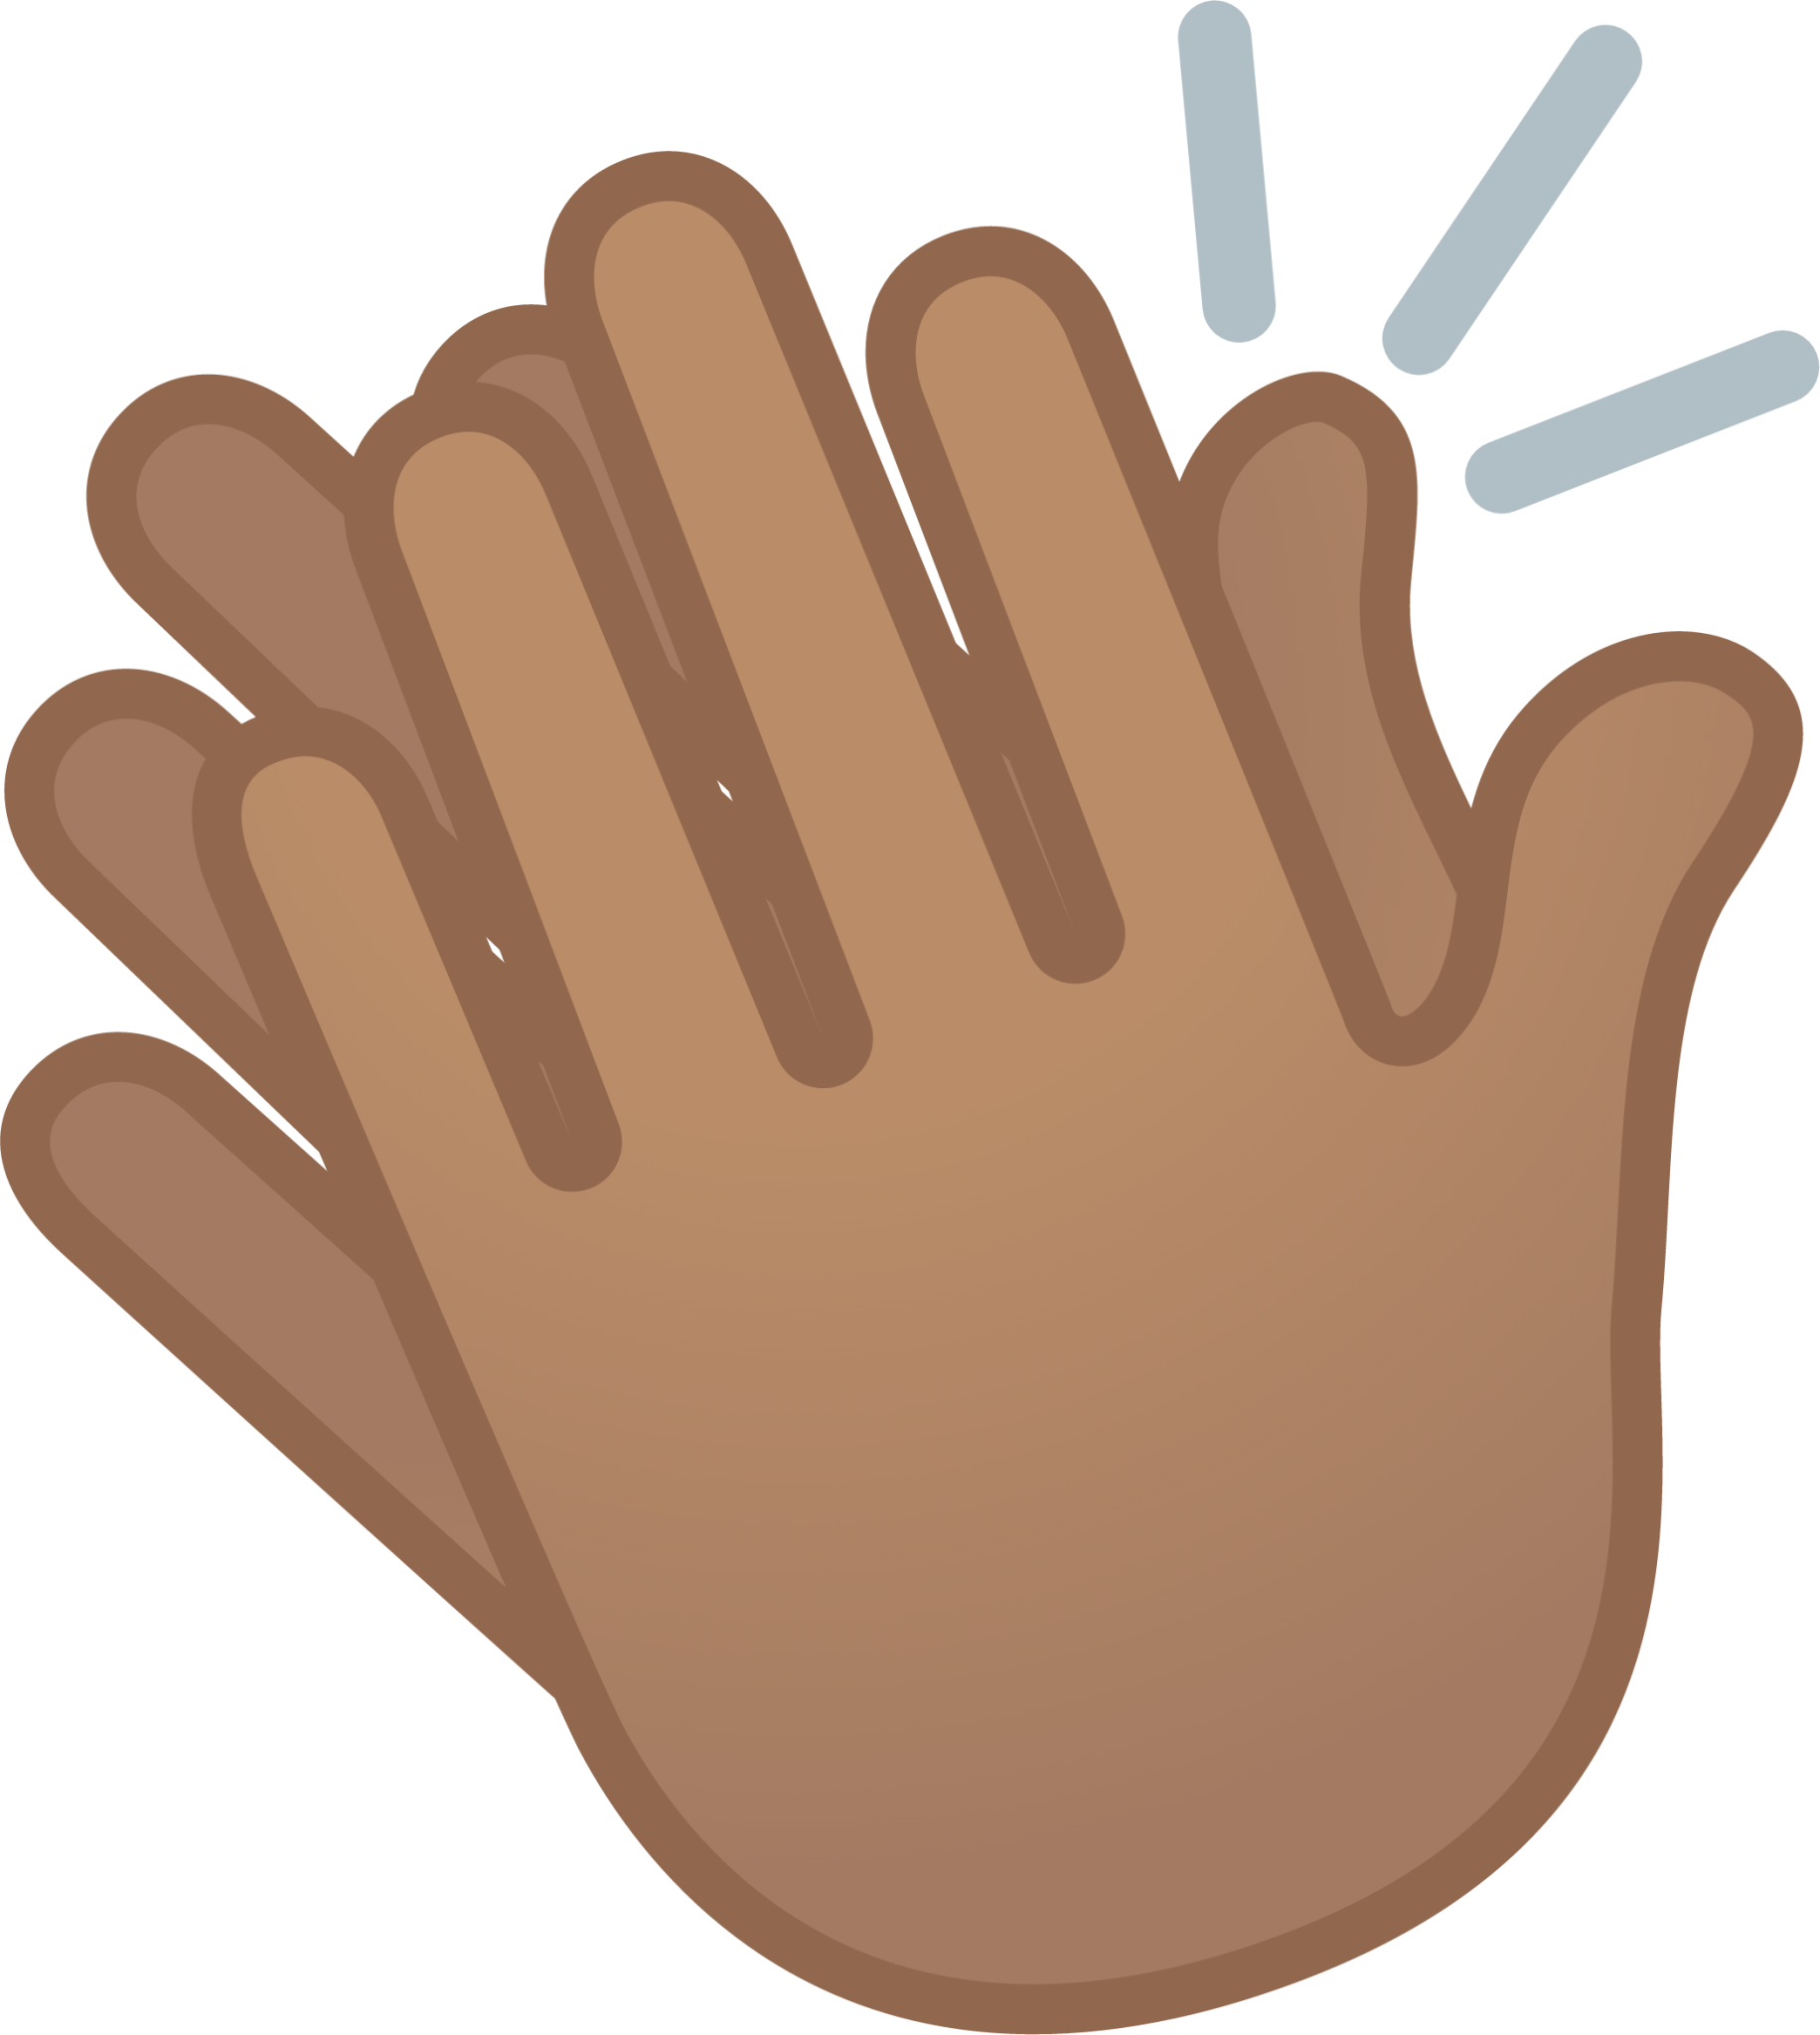 iPhone handshake emoji: How to set separate skin tones for each hand